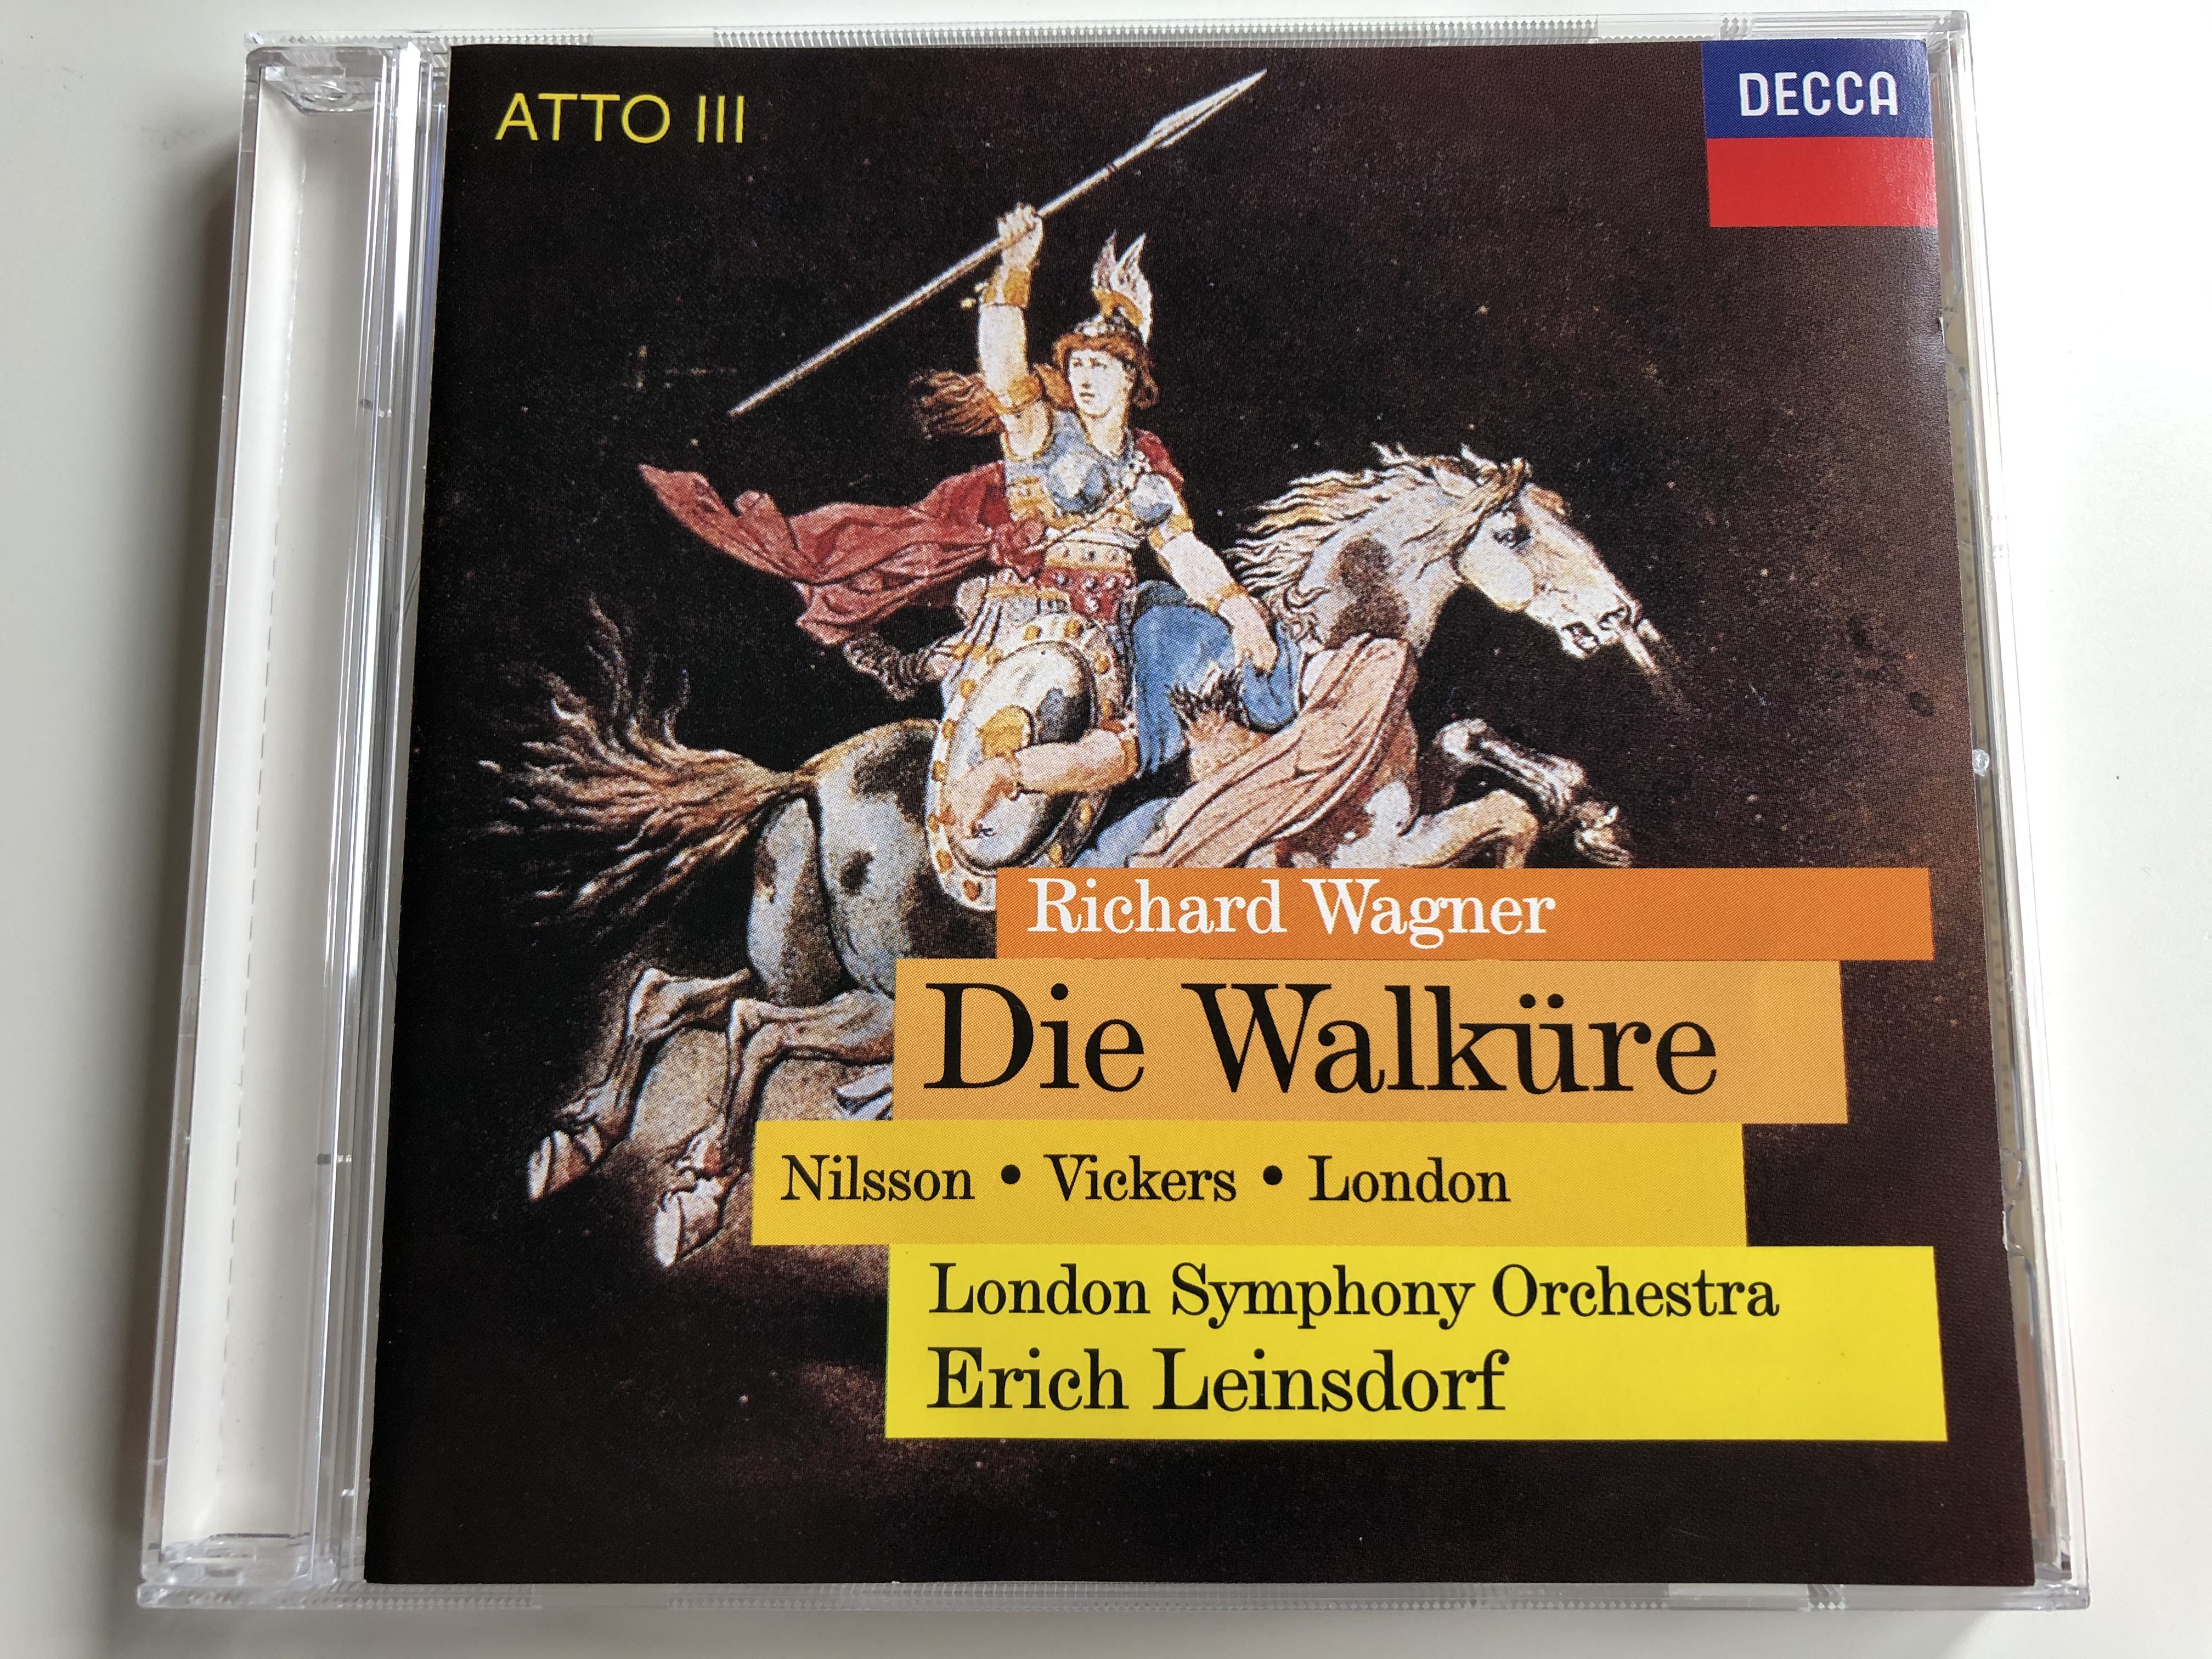 richard-wagner-die-walk-re-nilsson-vickers-london-london-symphony-orchestra-erich-leinsdorf-atto-iii-decca-audio-cd-1996-444272-2-1-.jpg